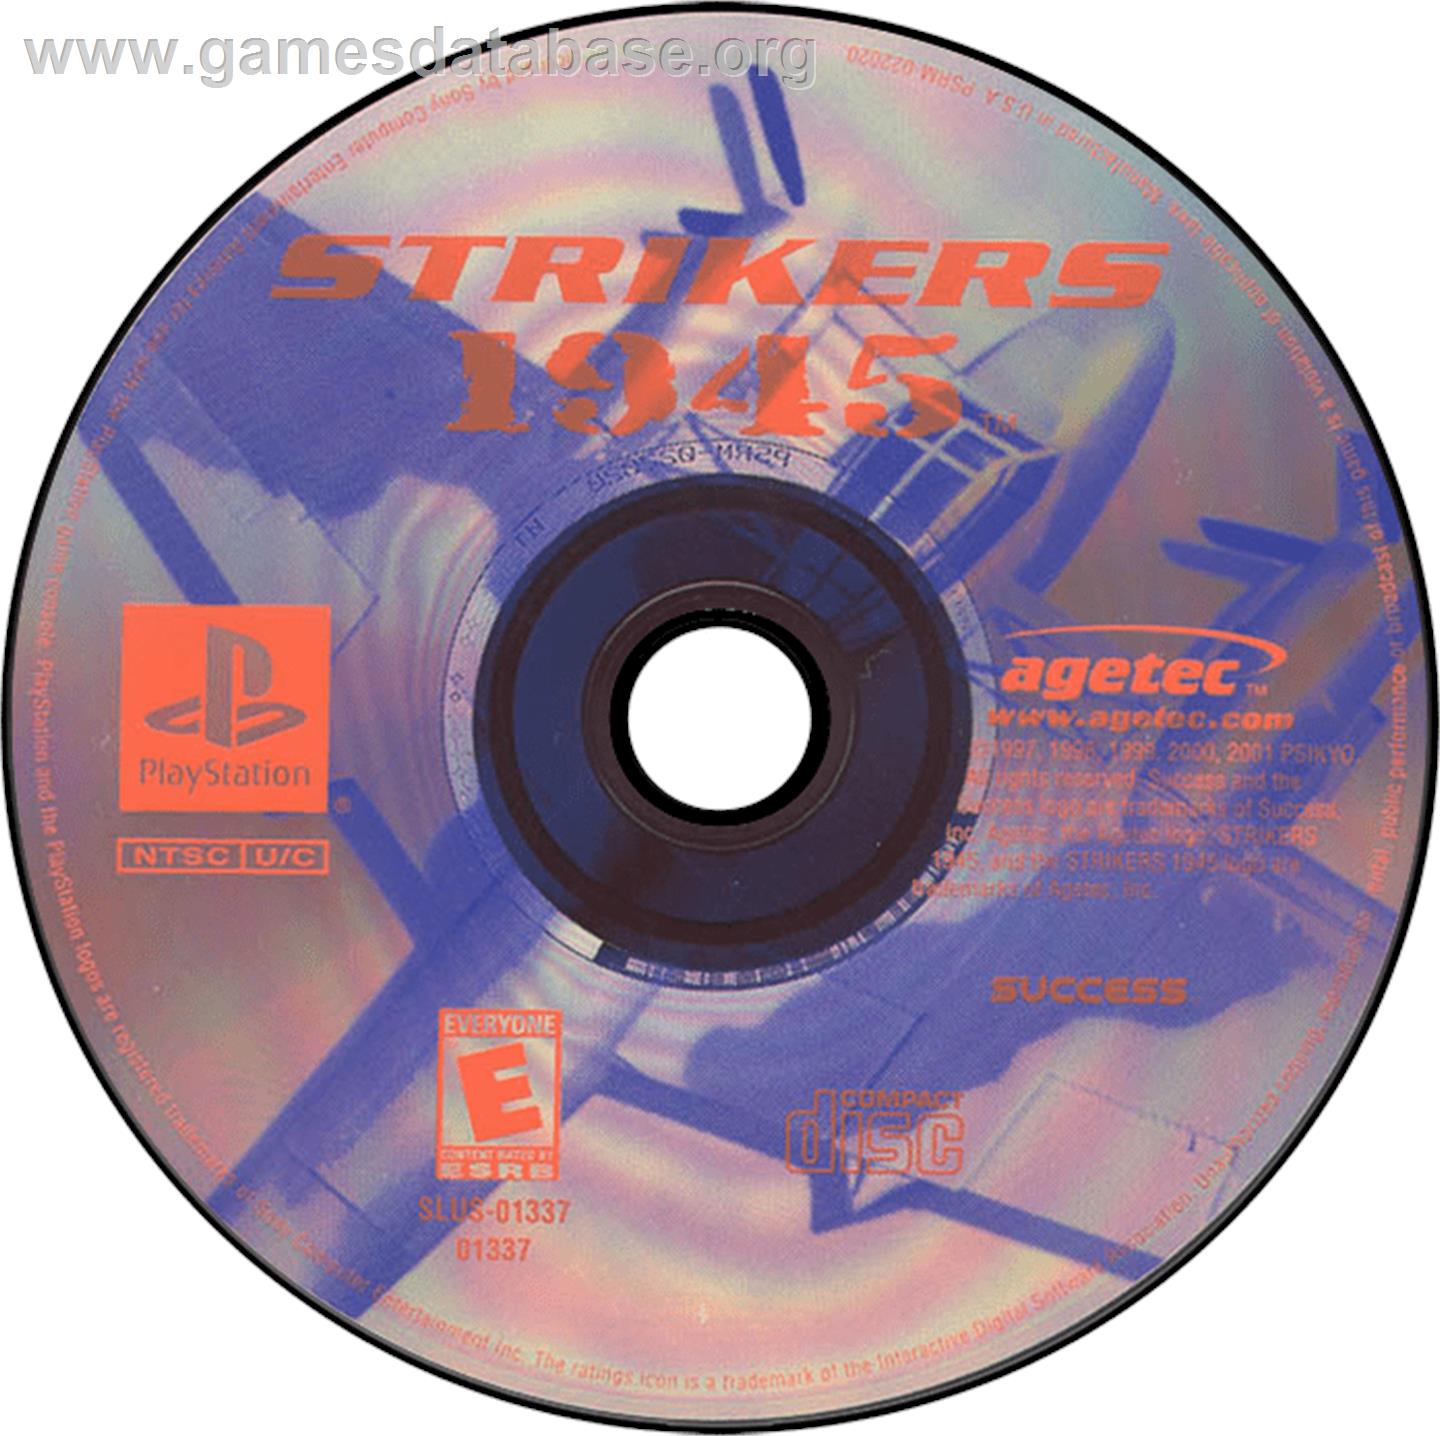 Strikers 1945 - Sony Playstation - Artwork - Disc